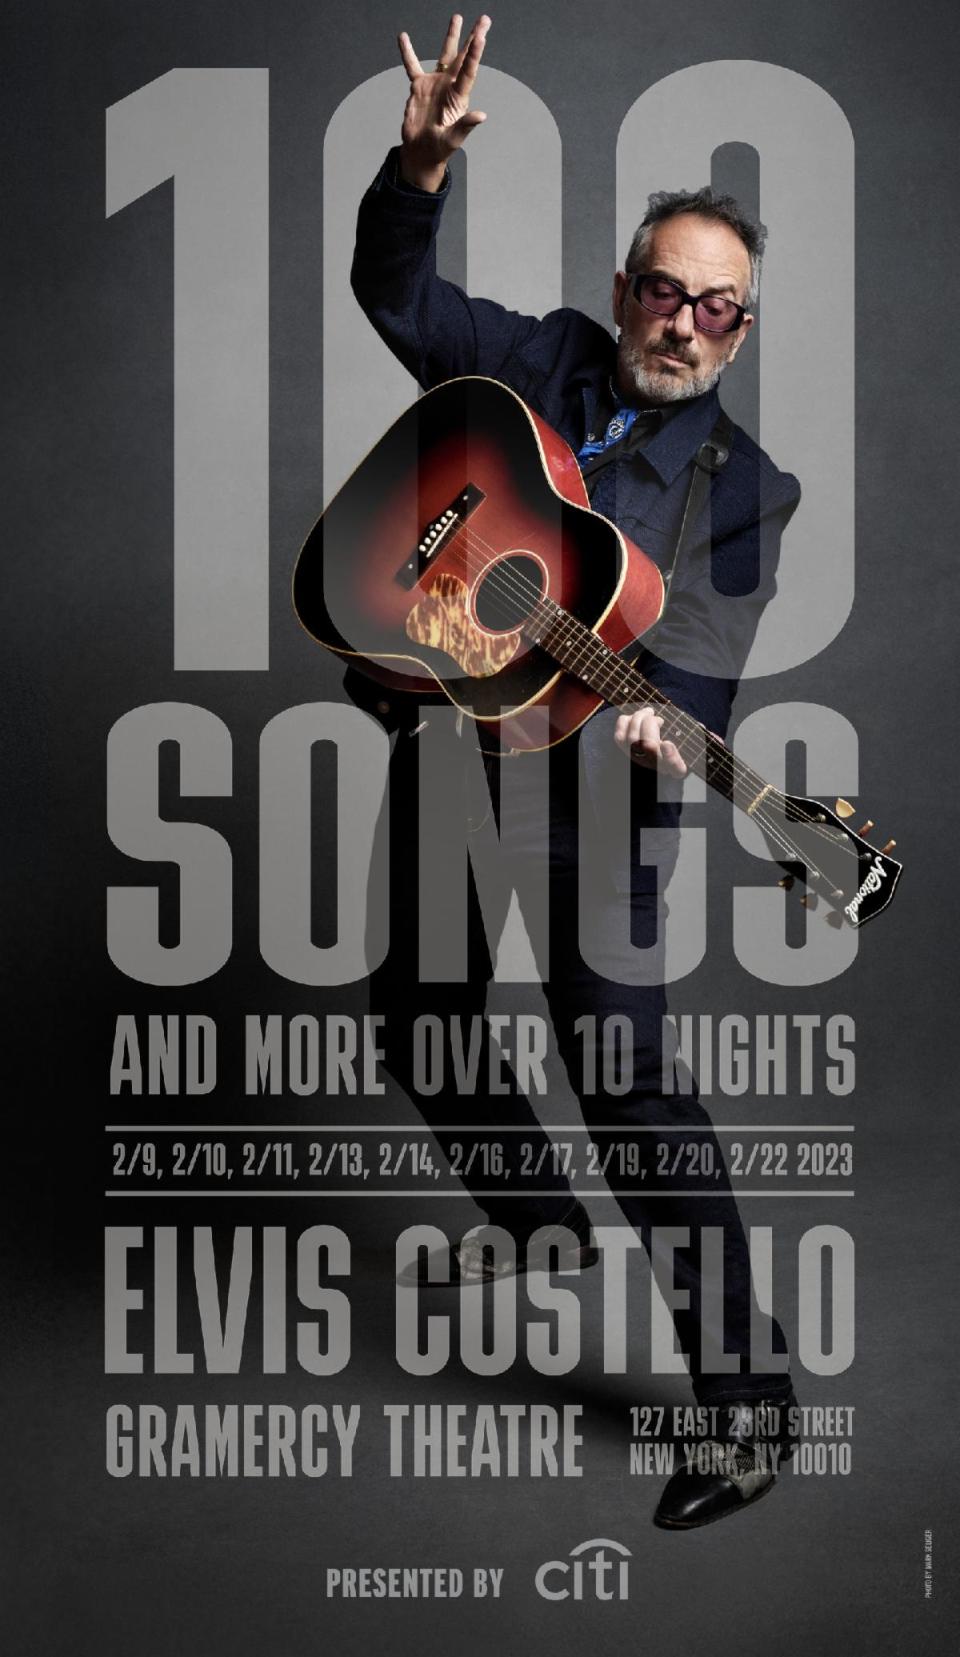 Elvis Costello poster image for New York City residency